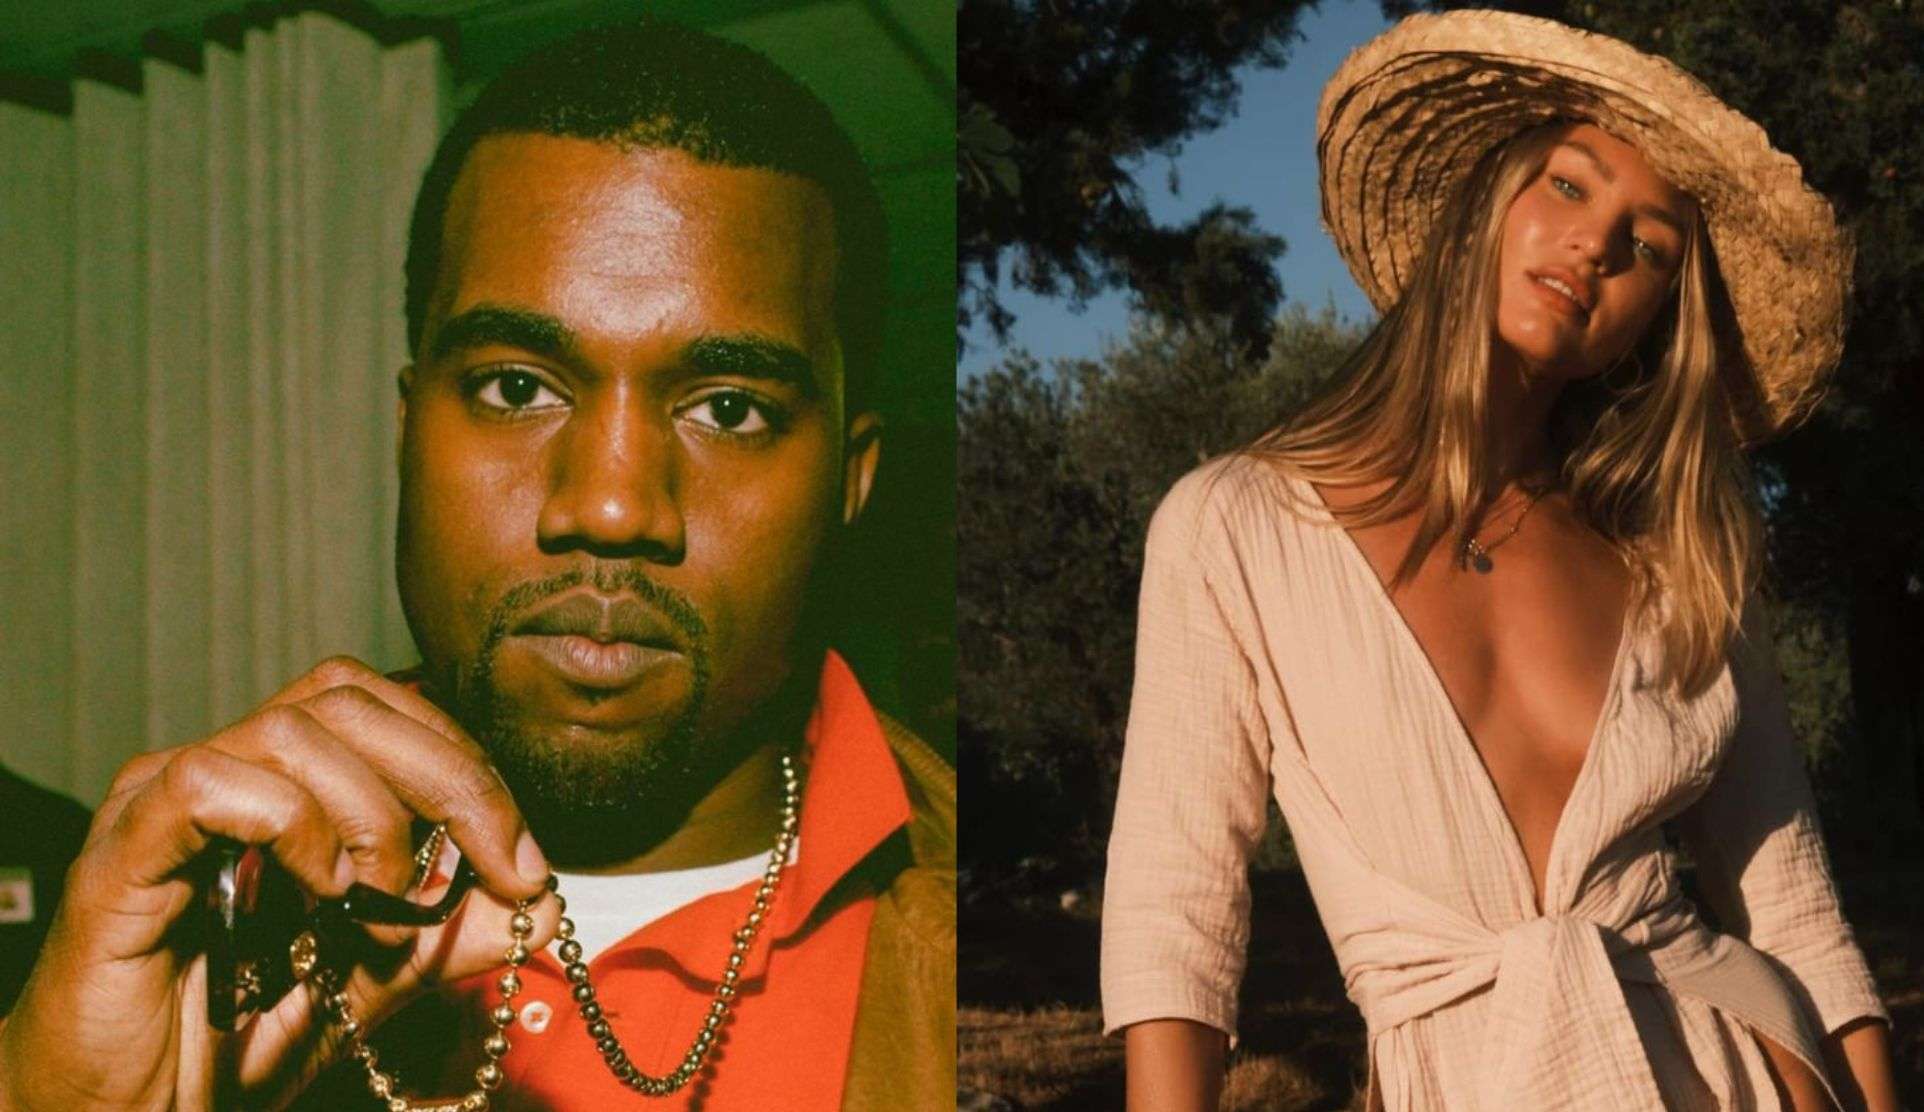 Kanye West vive novo romance com modelo Candice Swanepoel